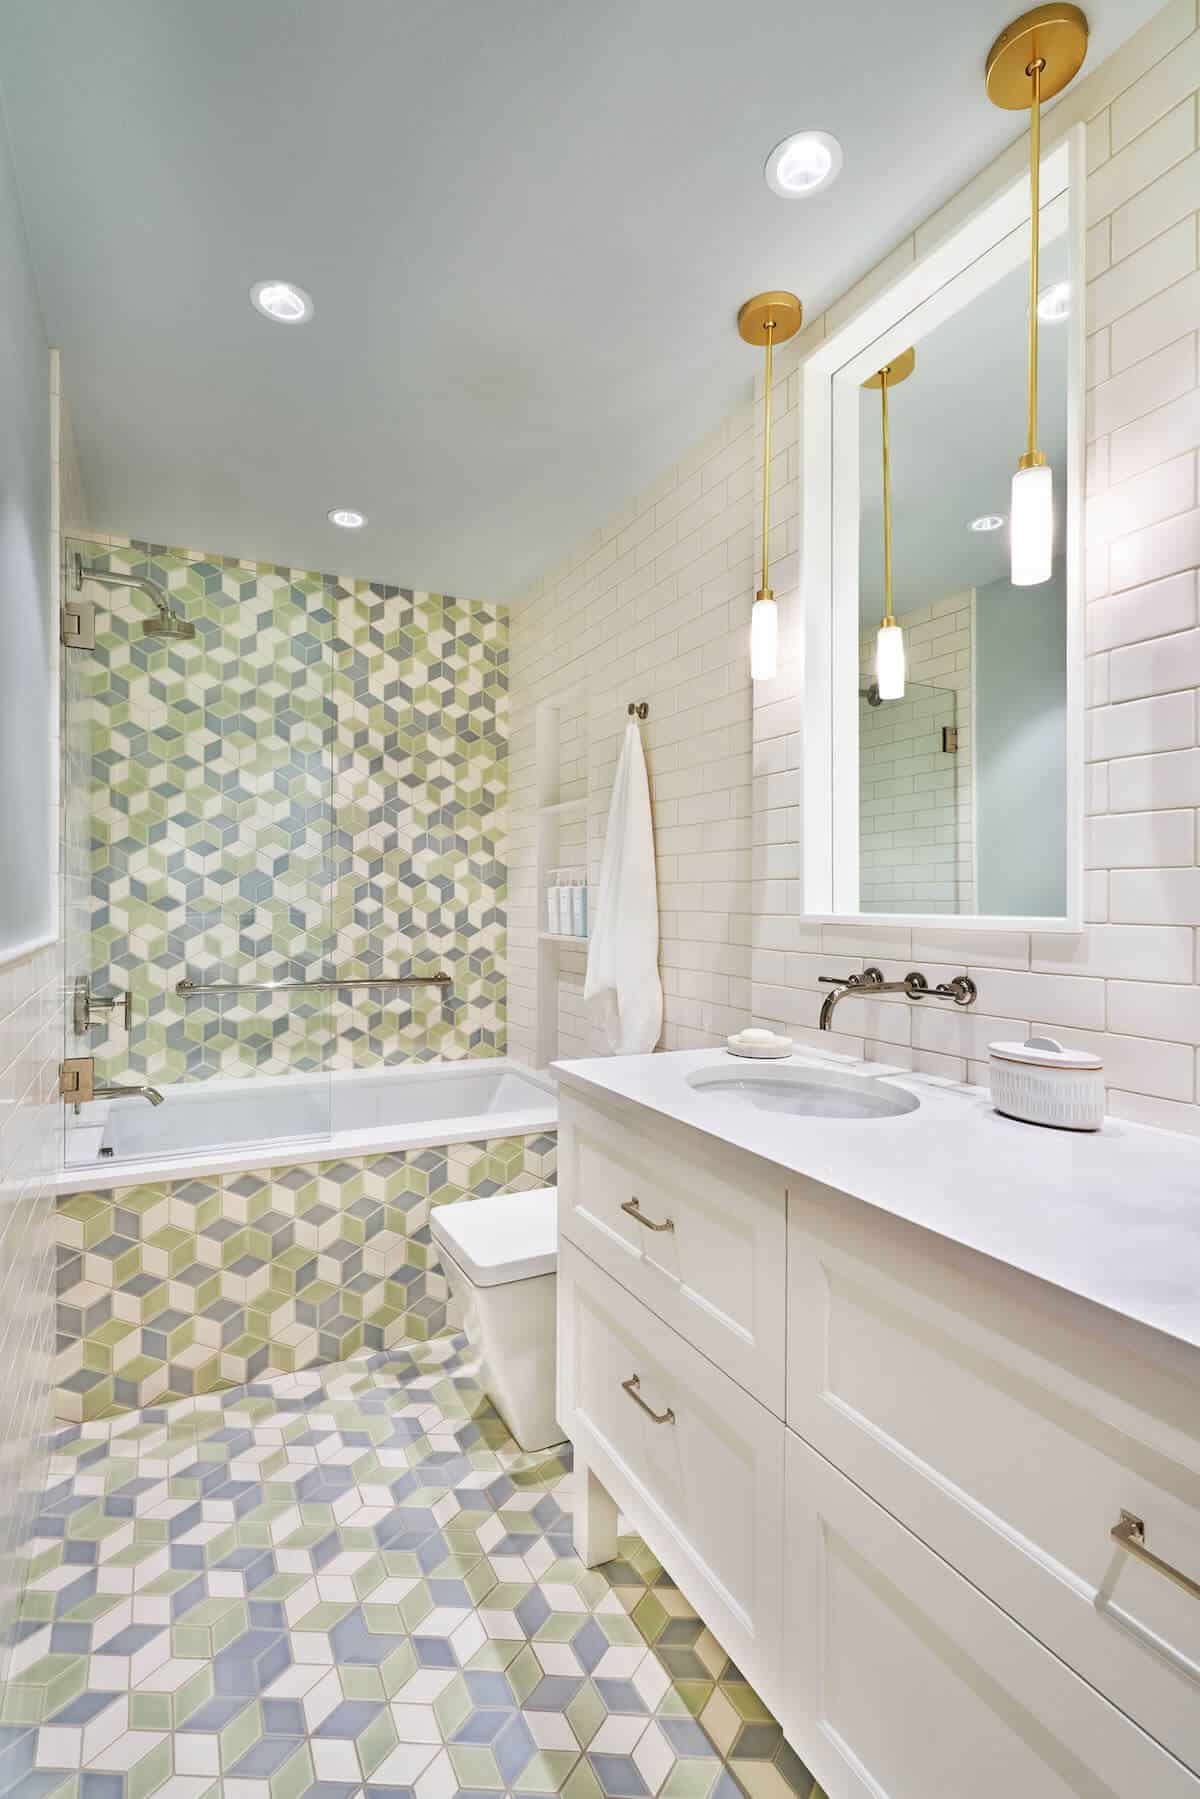 custom green and white tile work in bathroom